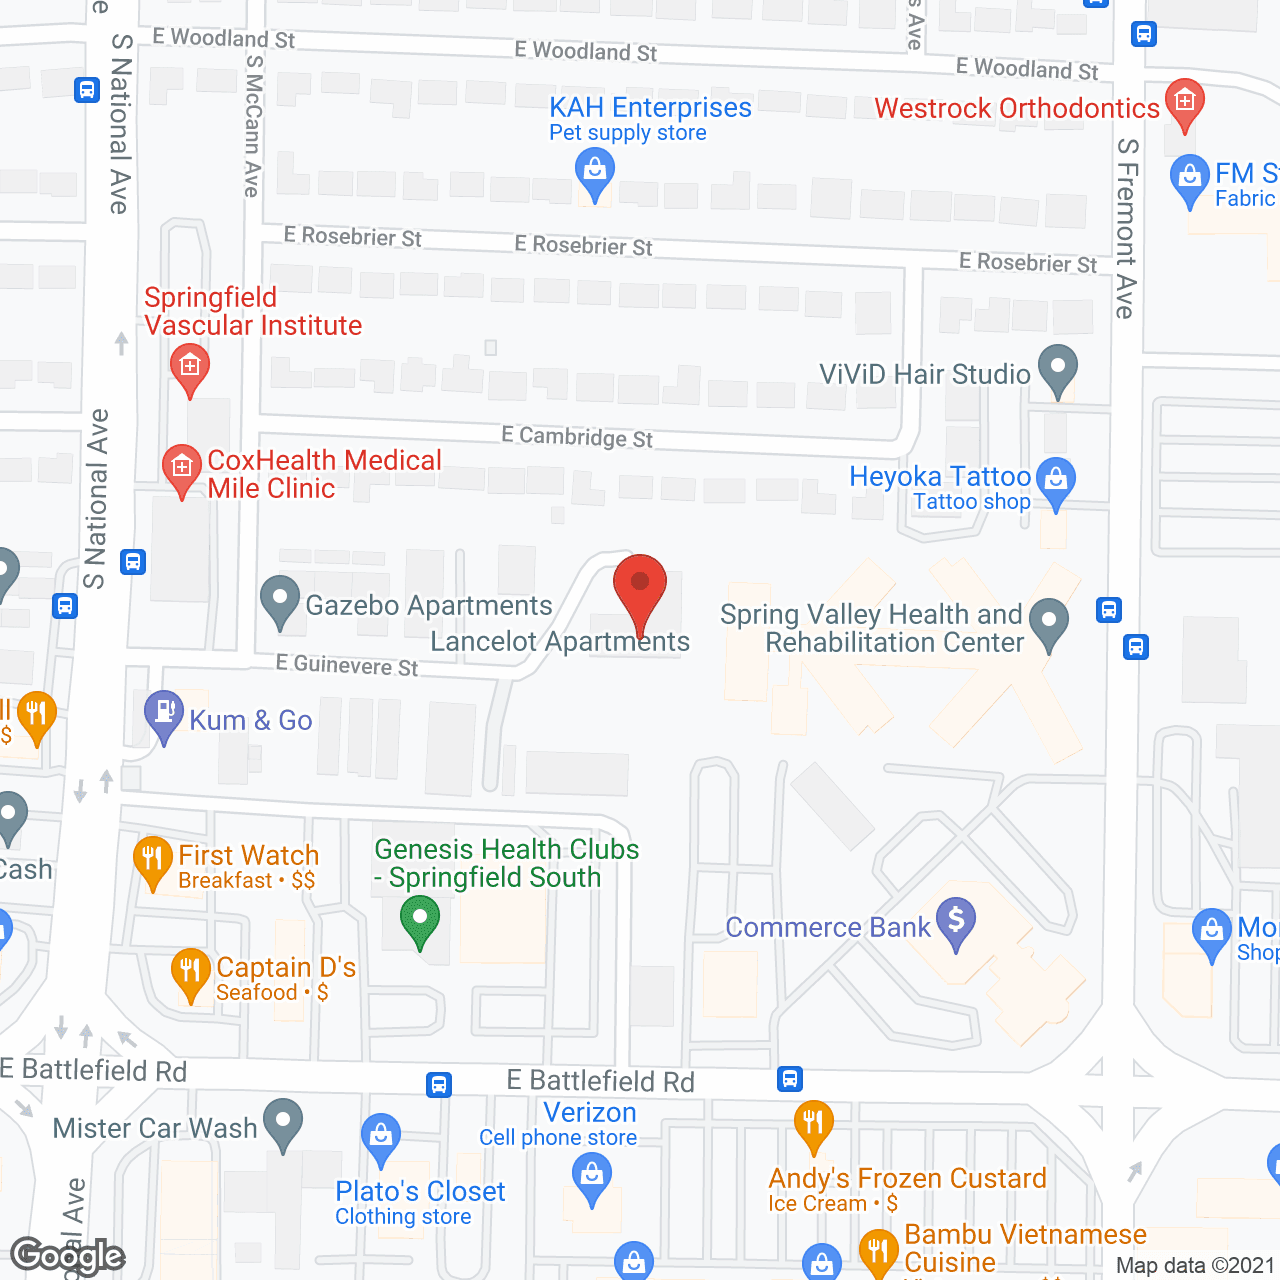 Lancelot Apartments in google map